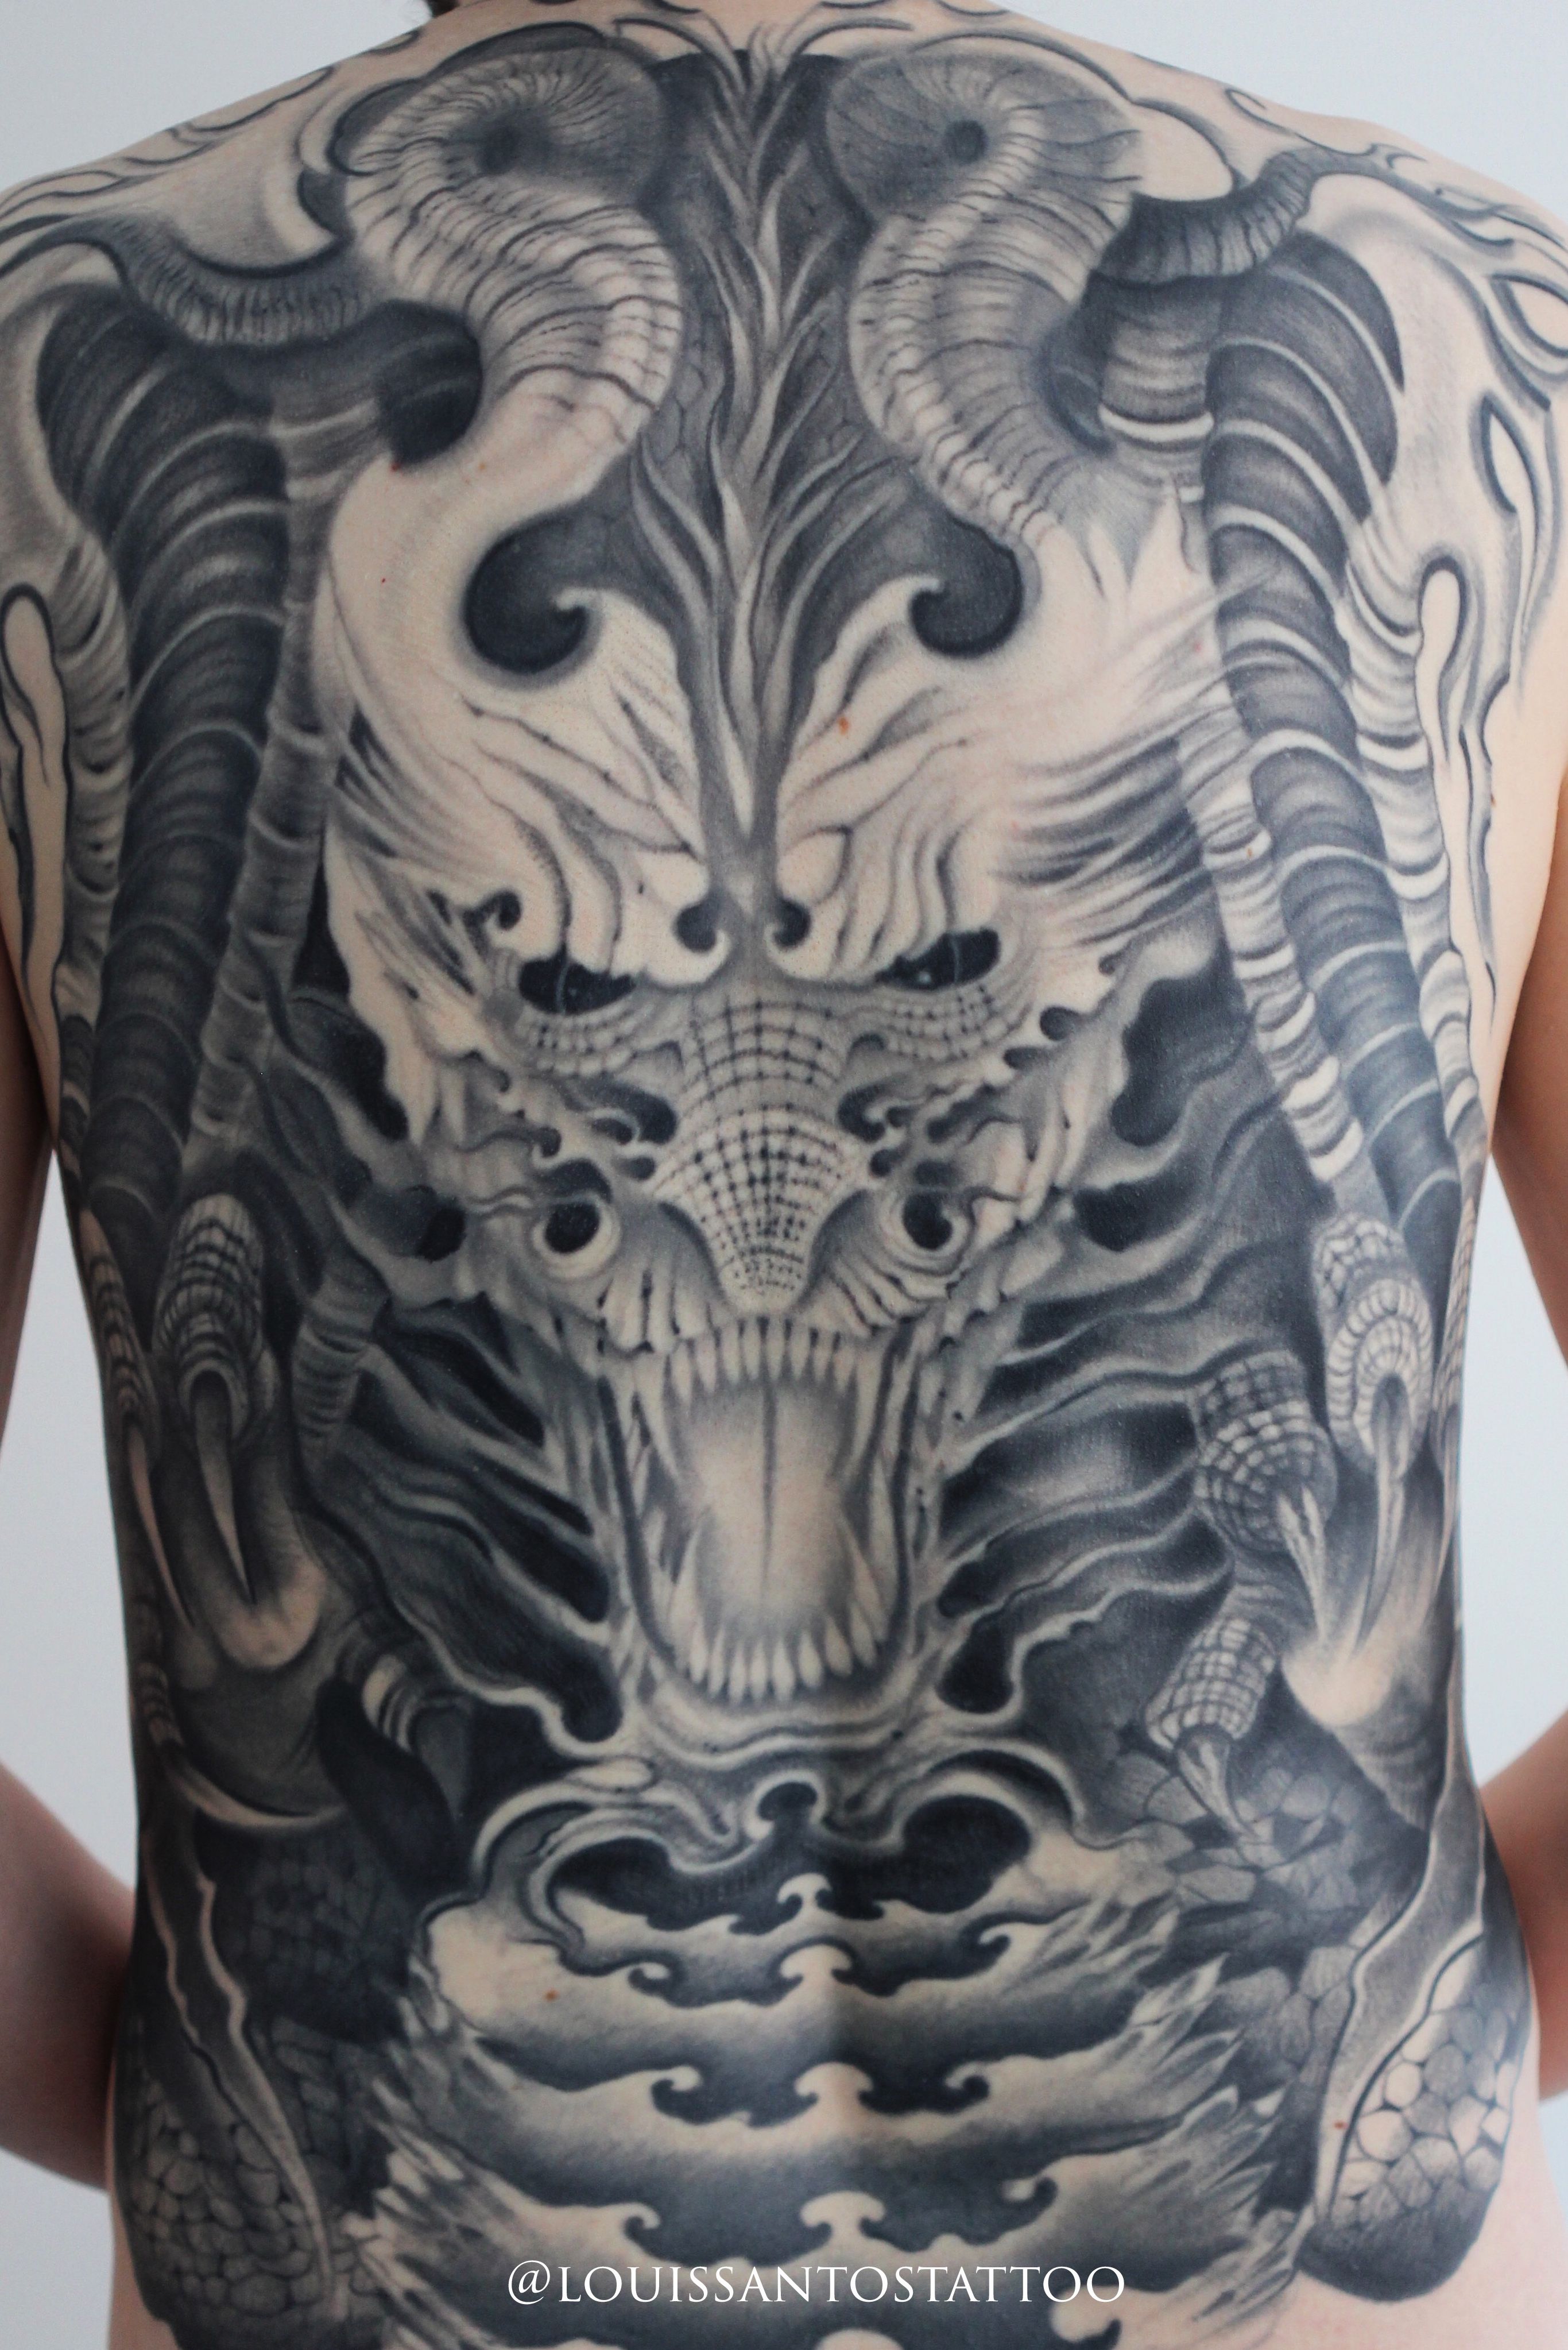 Beautiful Dragon Tattoo | Tech2Gadget